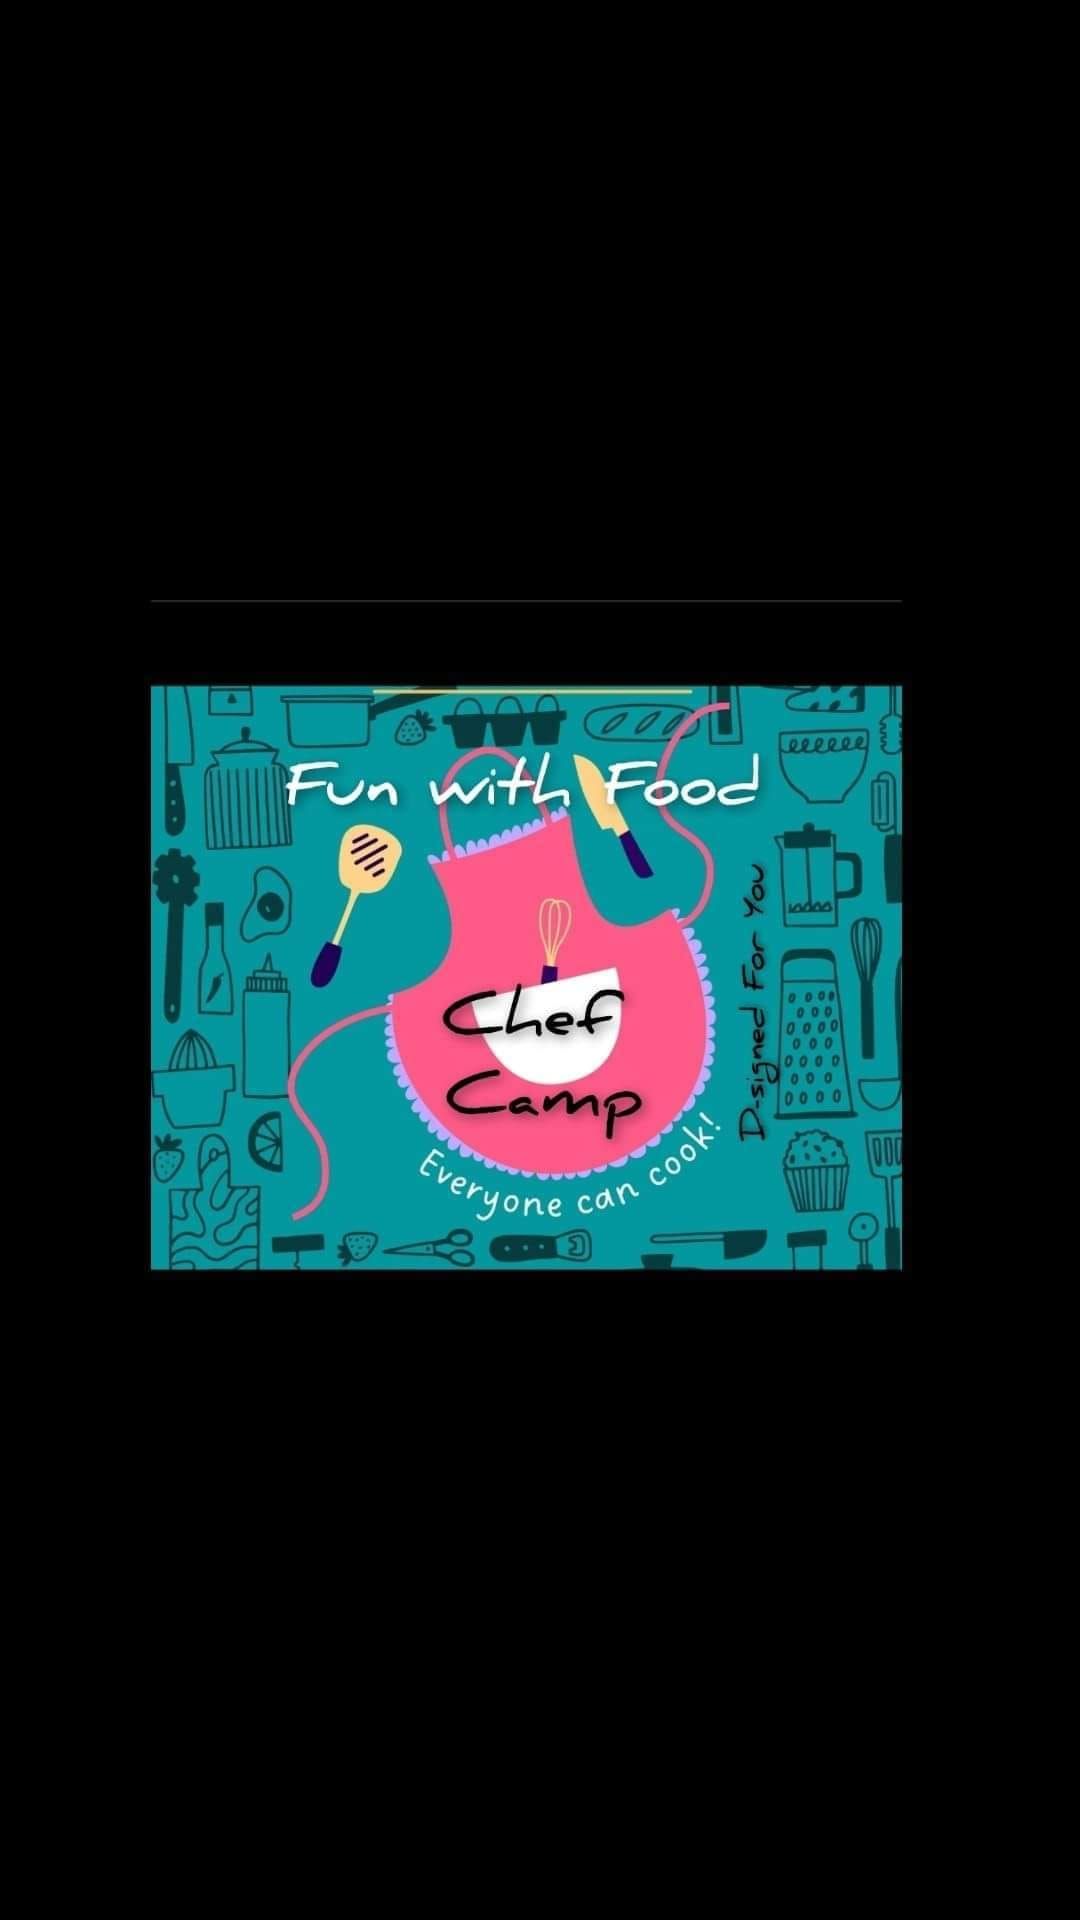 Camp  Creative- Fun with Food - Week Four